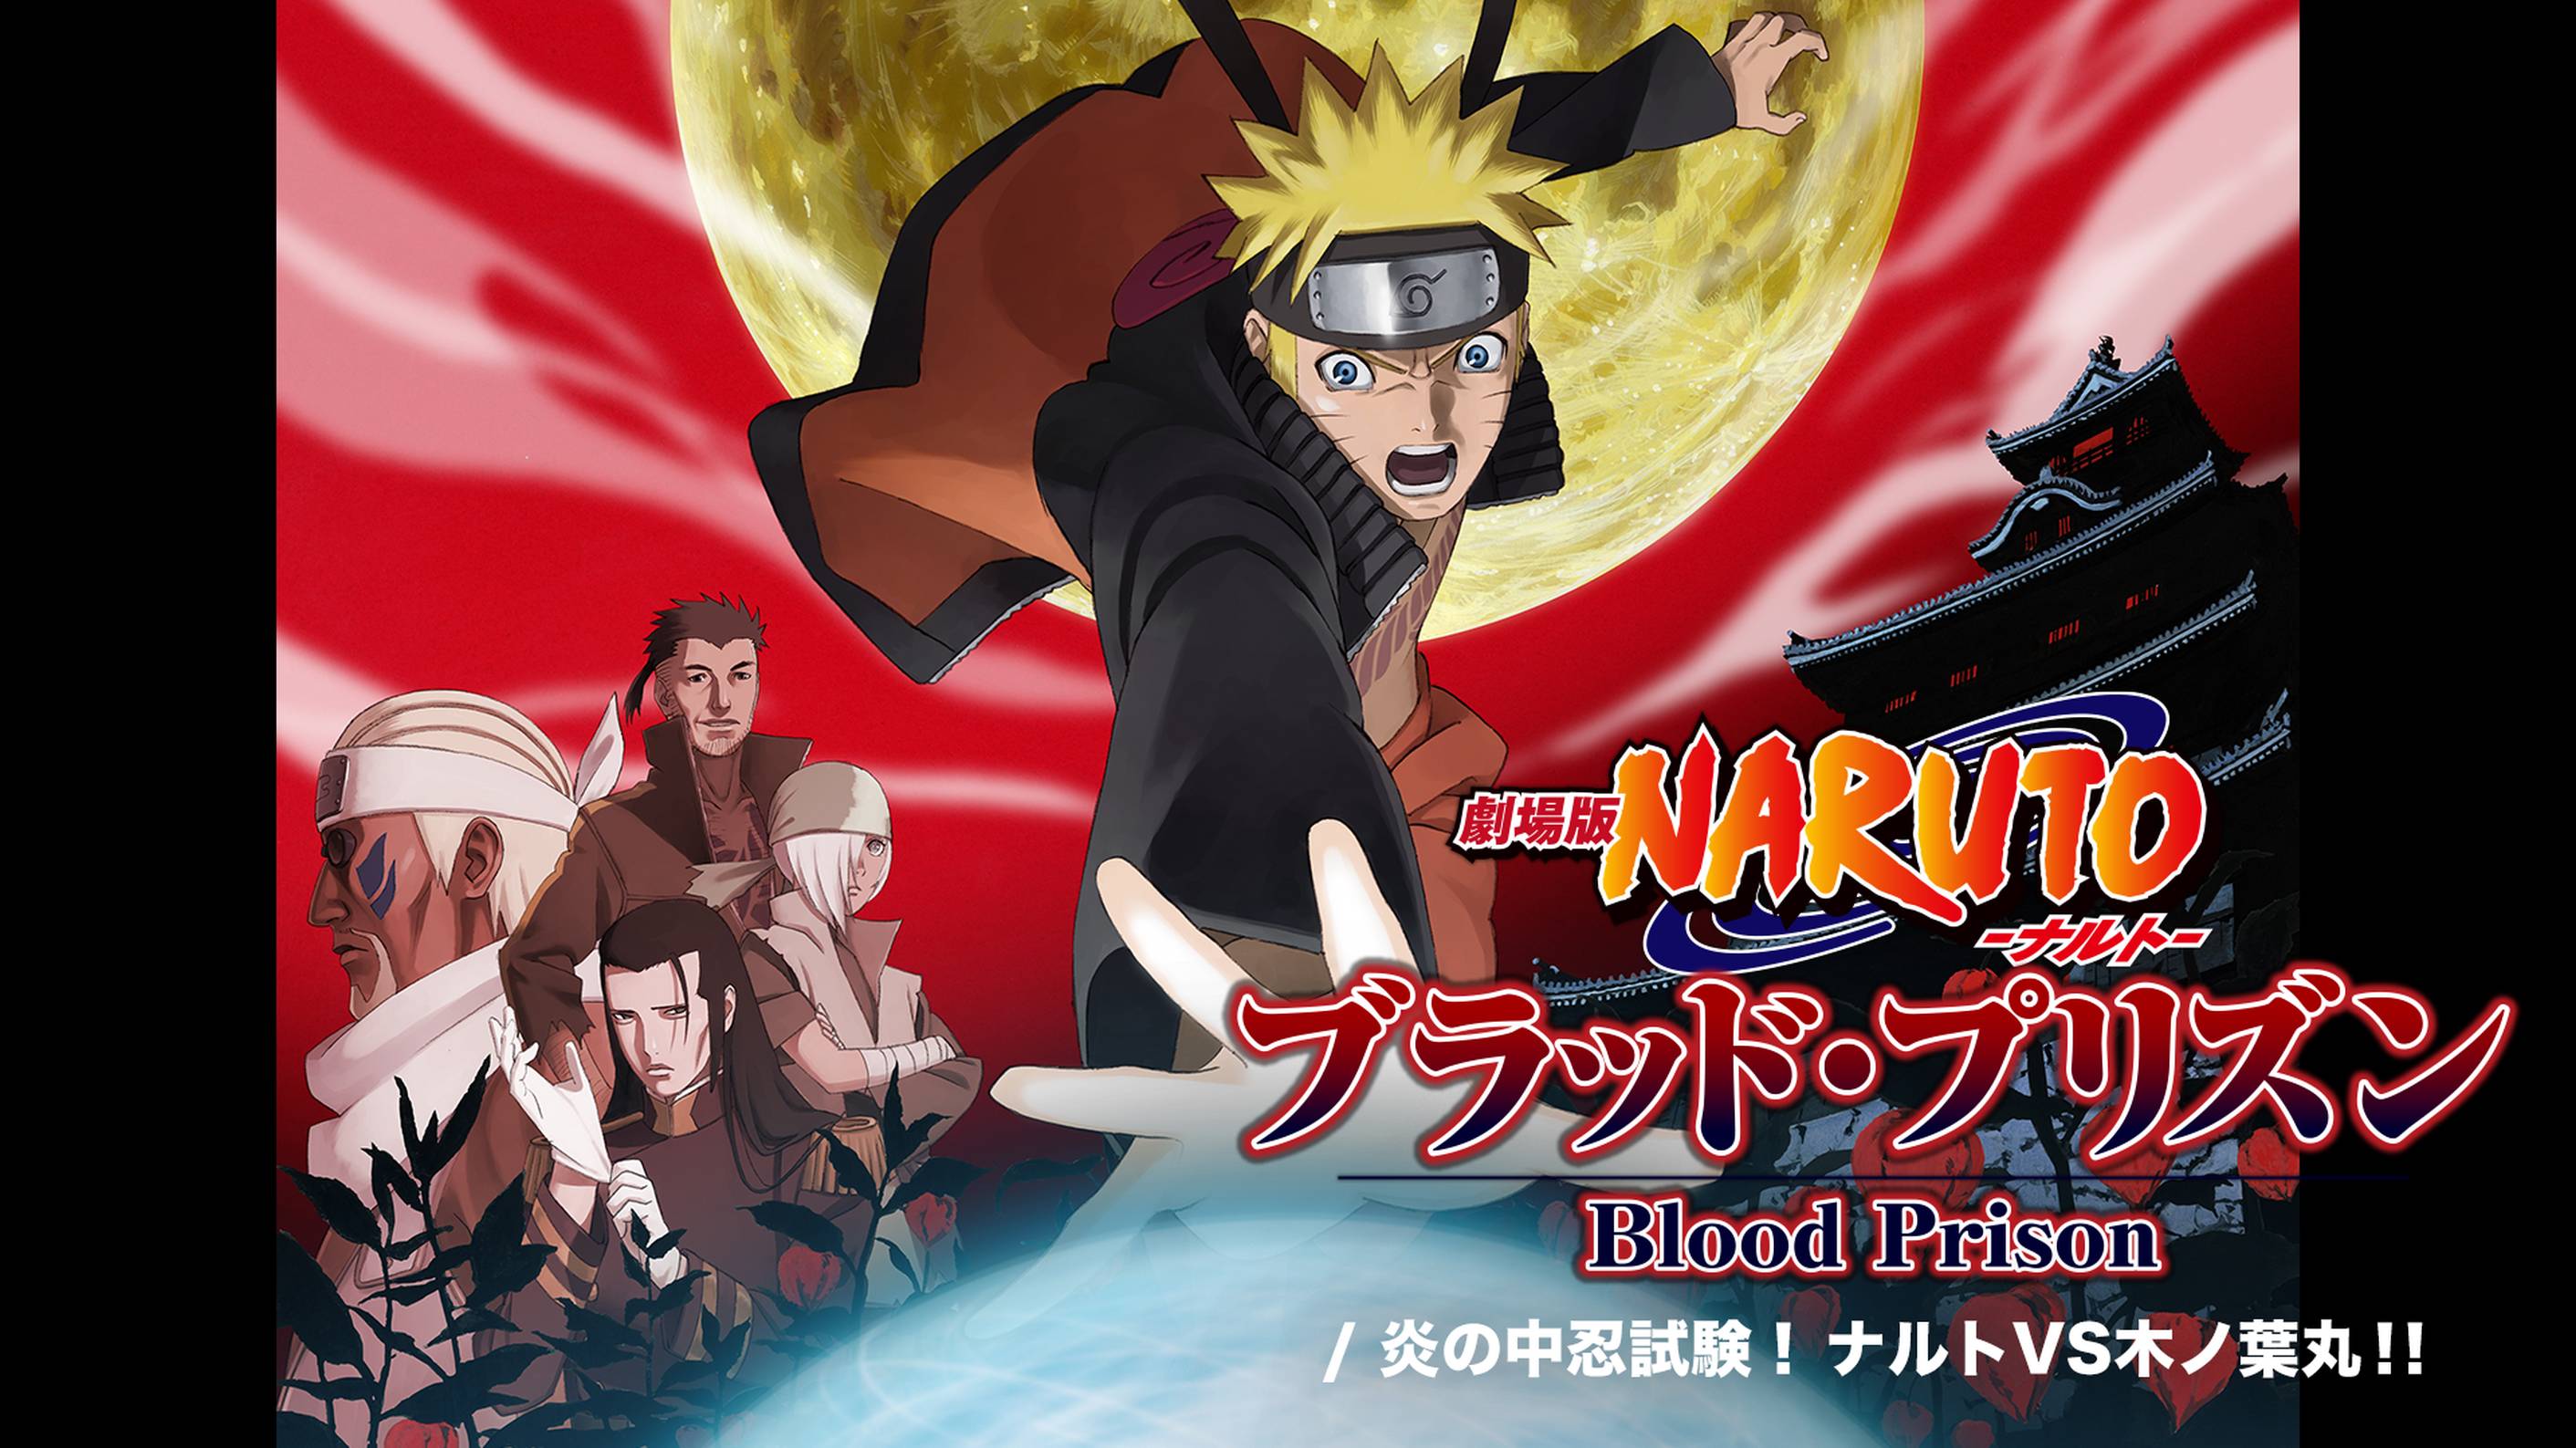 The Last Naruto The Movie アニメ 14 の動画視聴 U Next 31日間無料トライアル